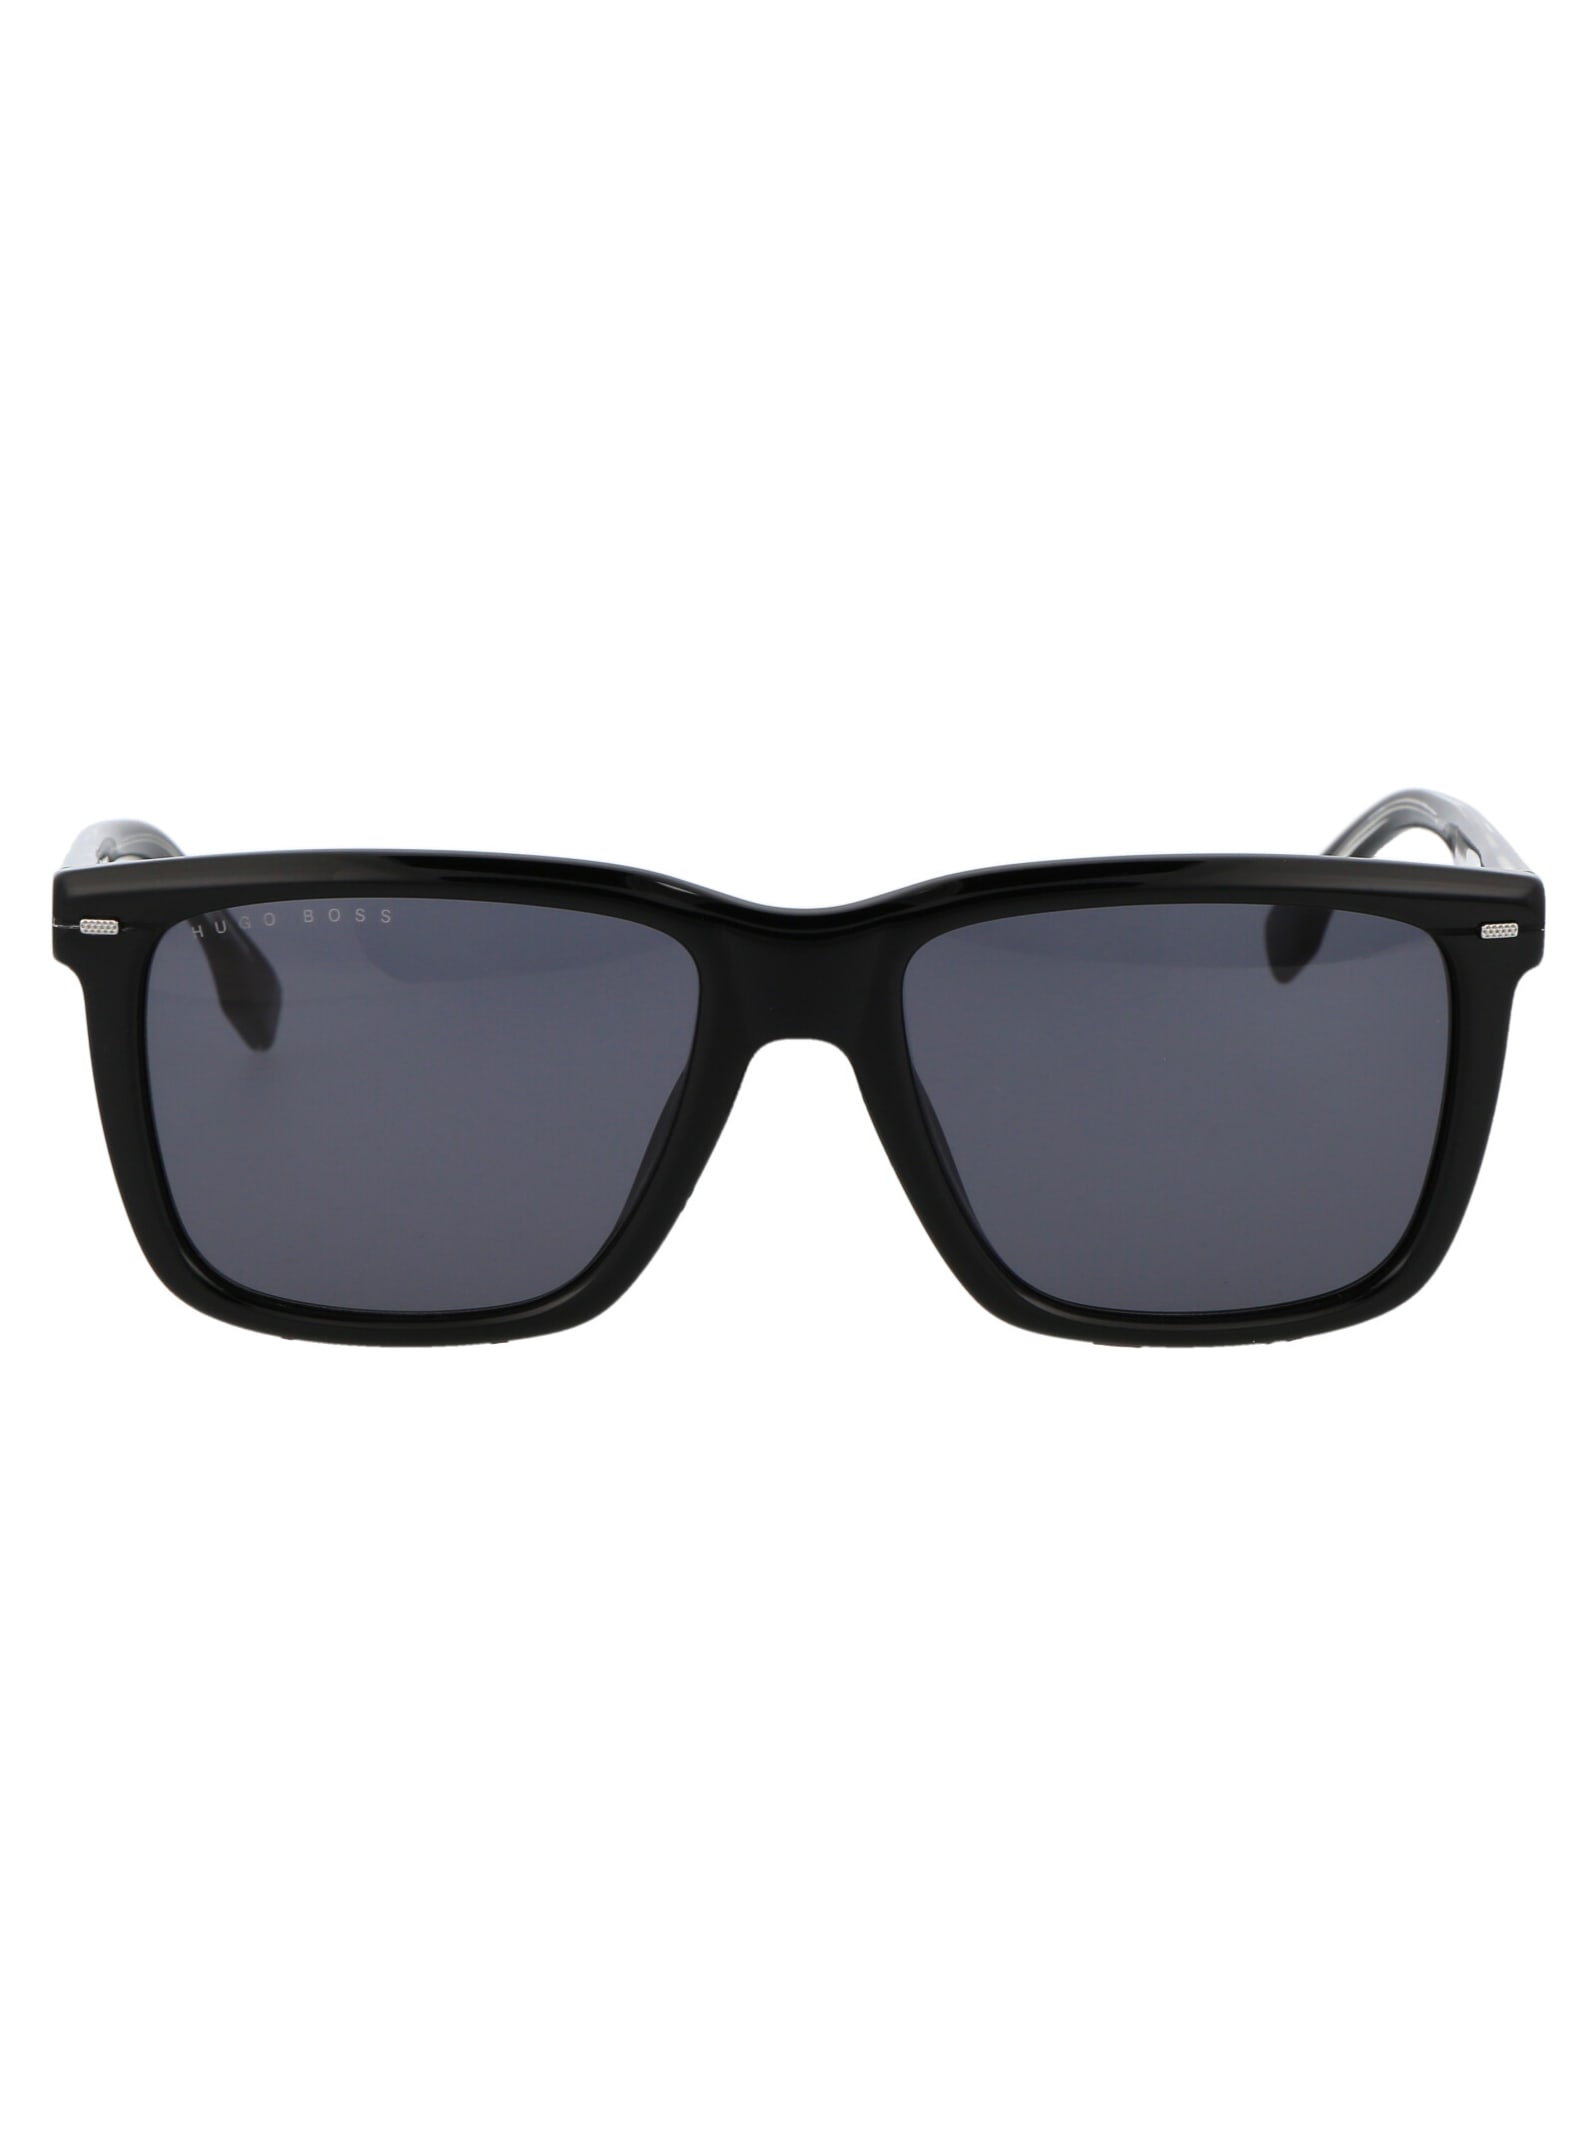 Boss 1317/s Sunglasses